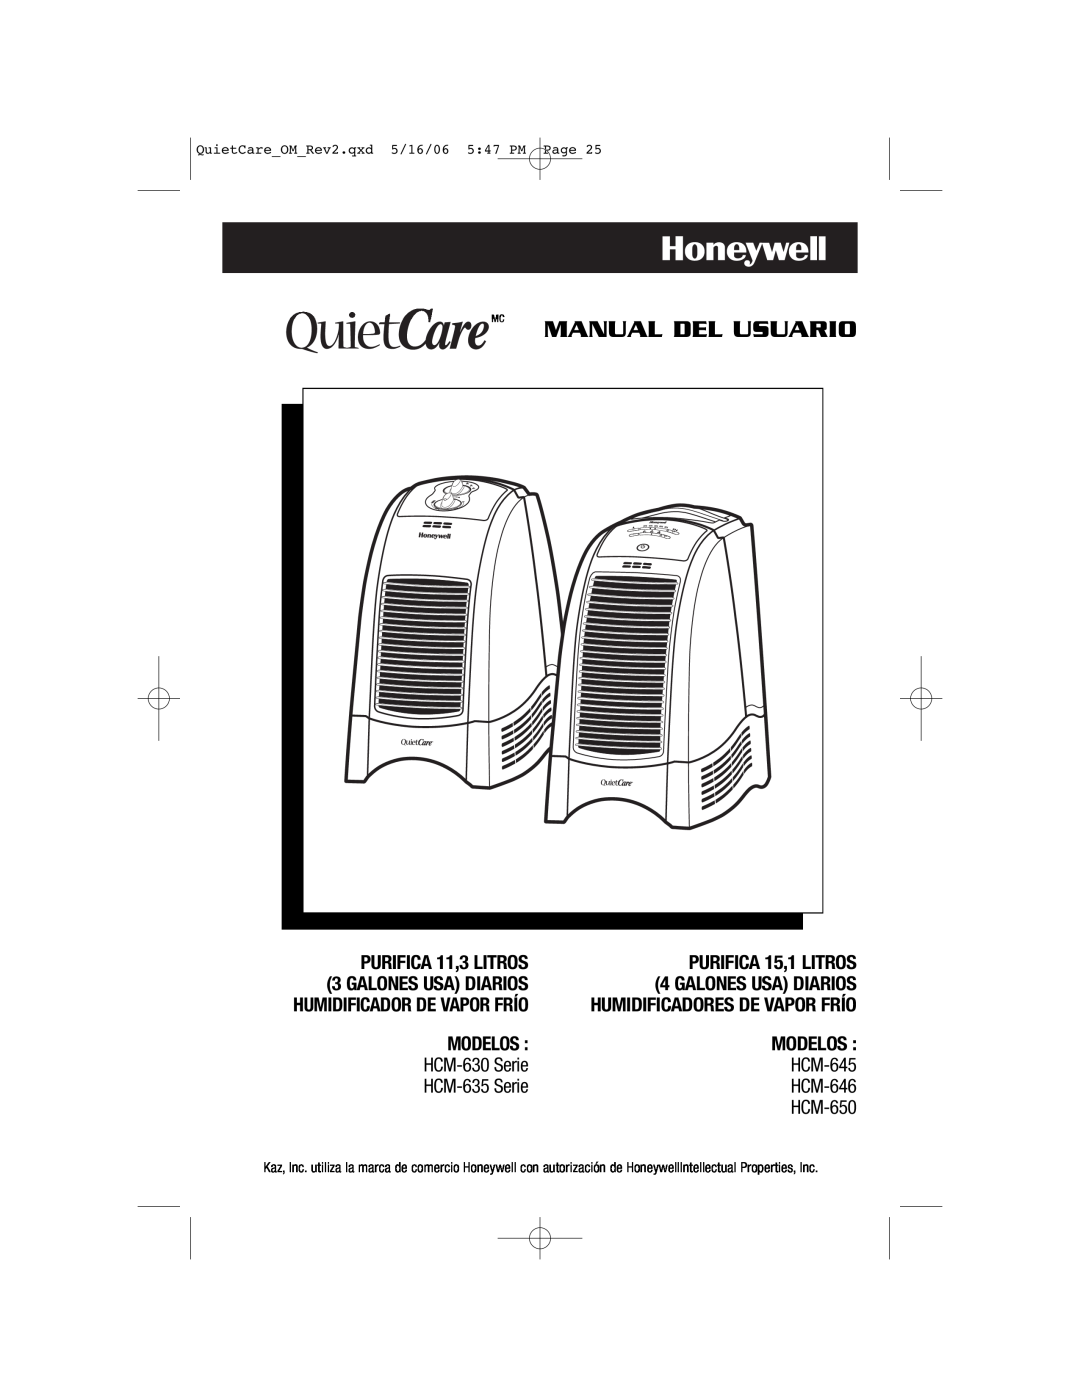 Honeywell HCM-646 Manual Del Usuario, PURIFICA 11,3 LITROS, PURIFICA 15,1 LITROS, Galones Usa Diarios, Modelos, HCM-645 